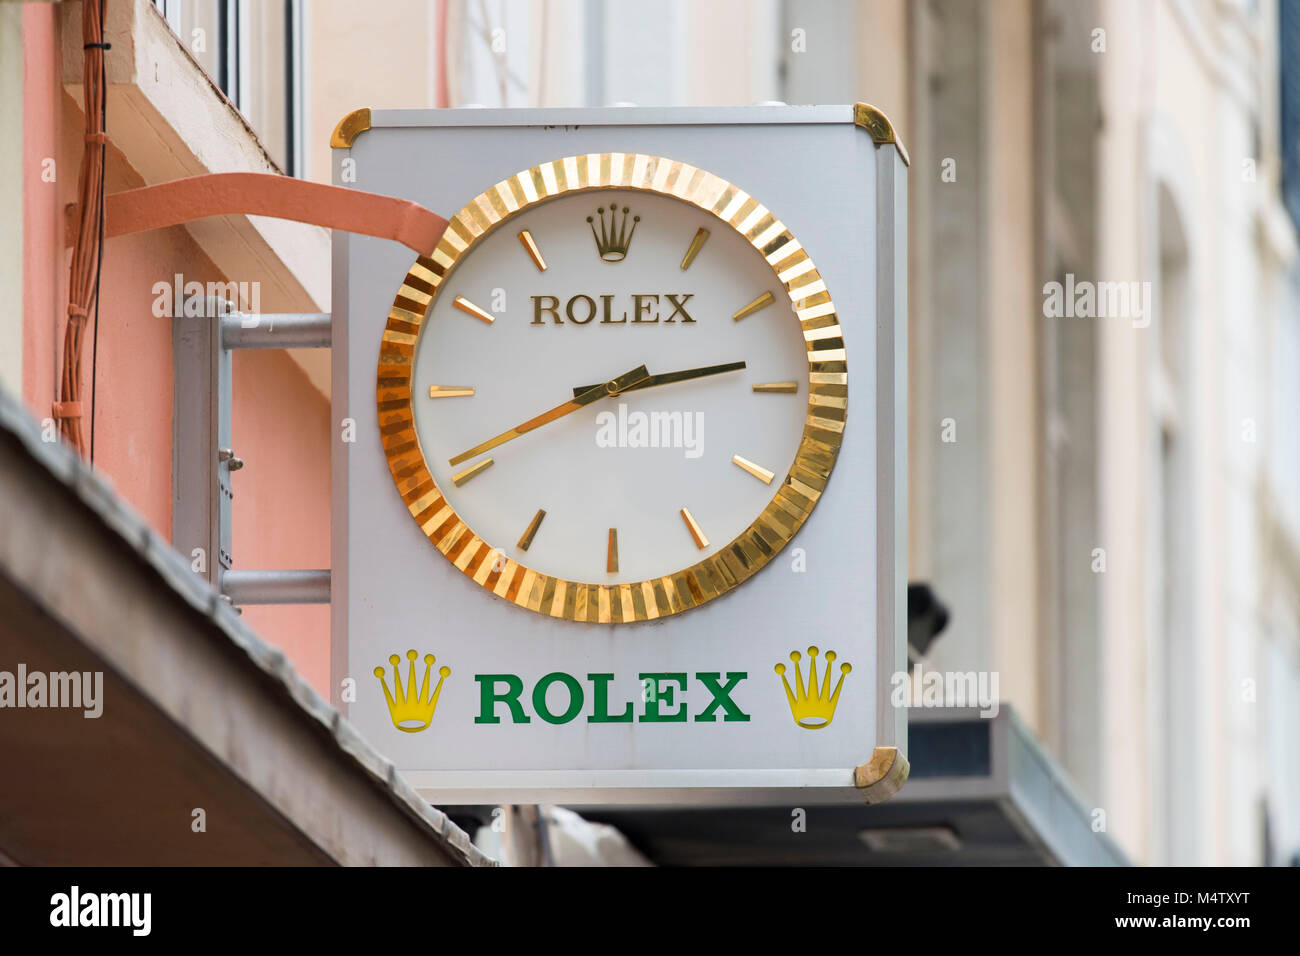 Rolex watch store sign logo. Stock Photo